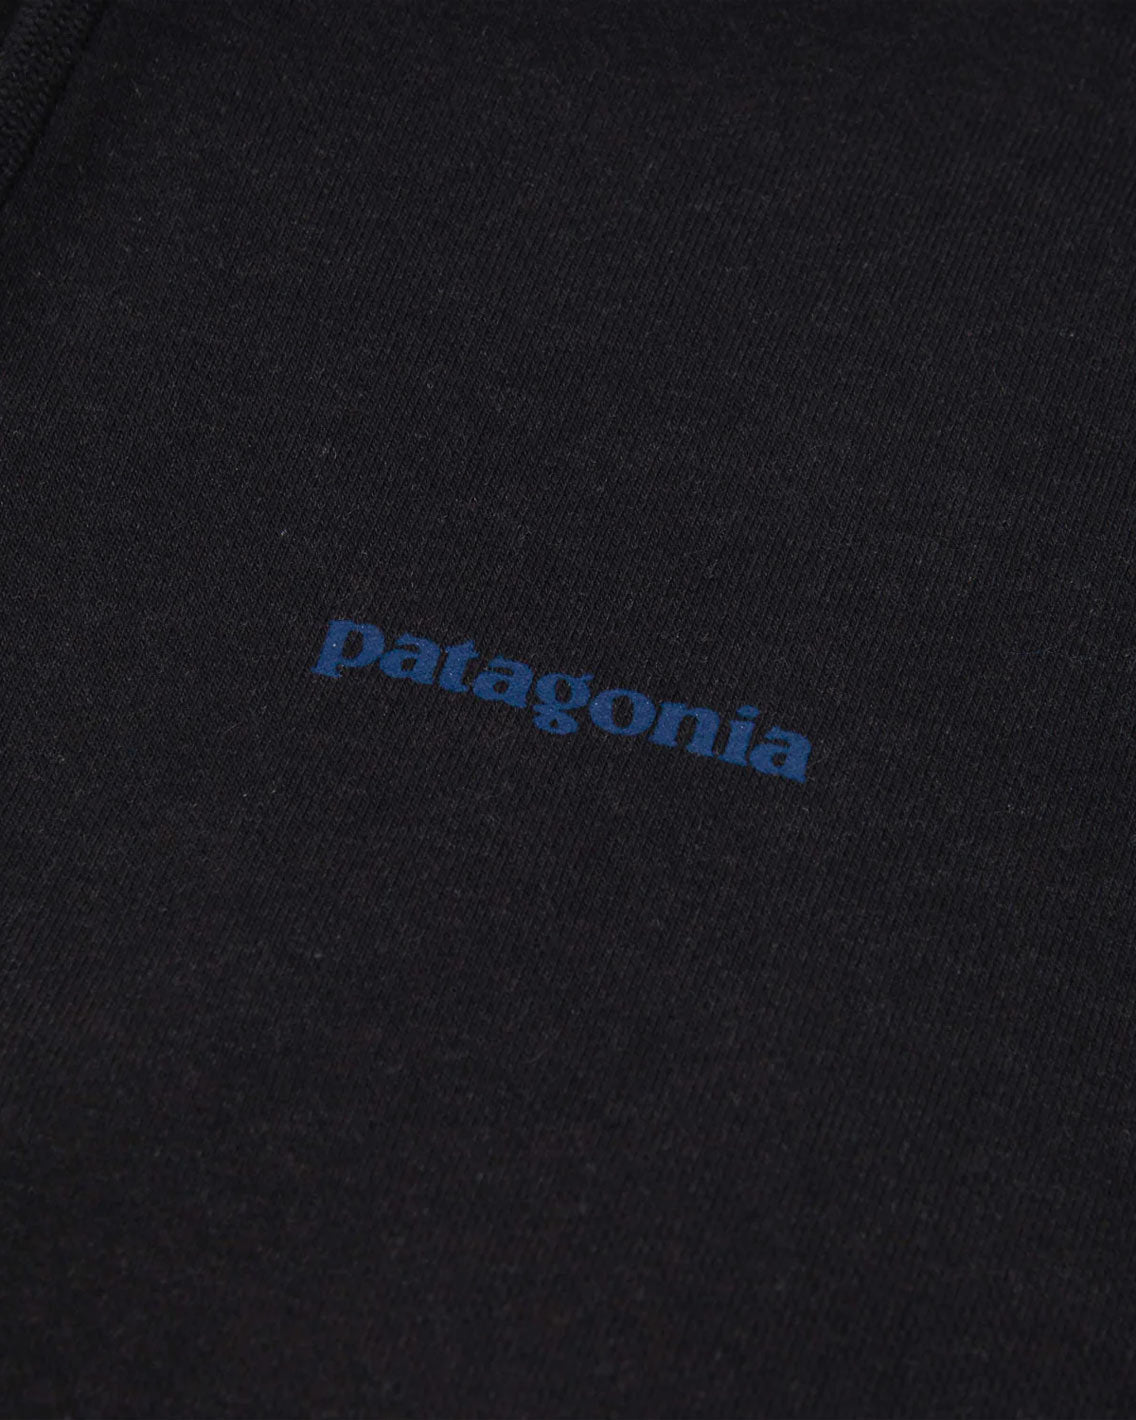 Patagonia - Boardshort Logo Uprisal Hoody - Ink Black